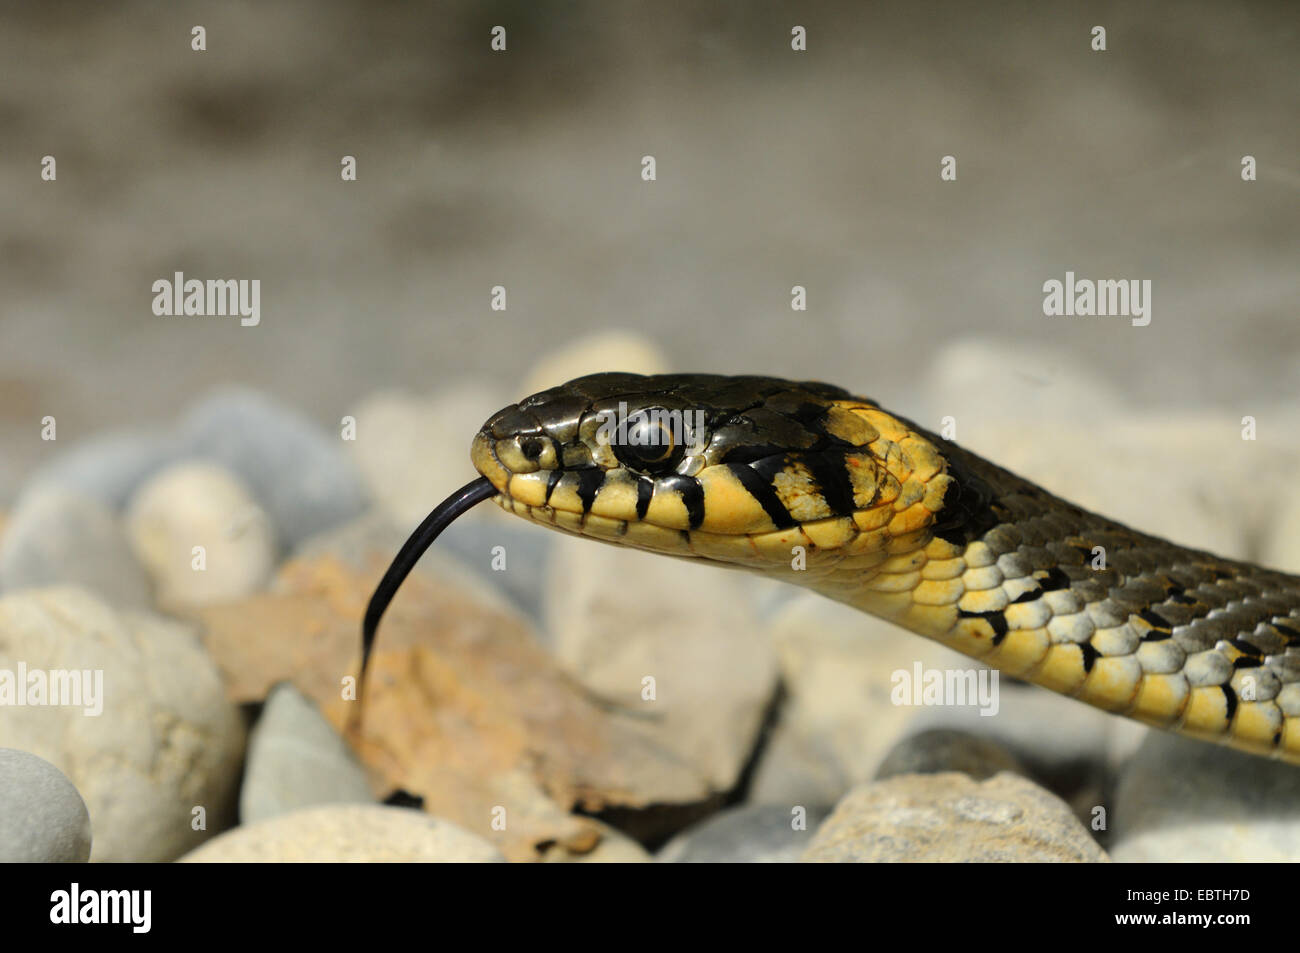 Balkan grass snake (Natrix natrix persa), flicking, Germany Stock Photo